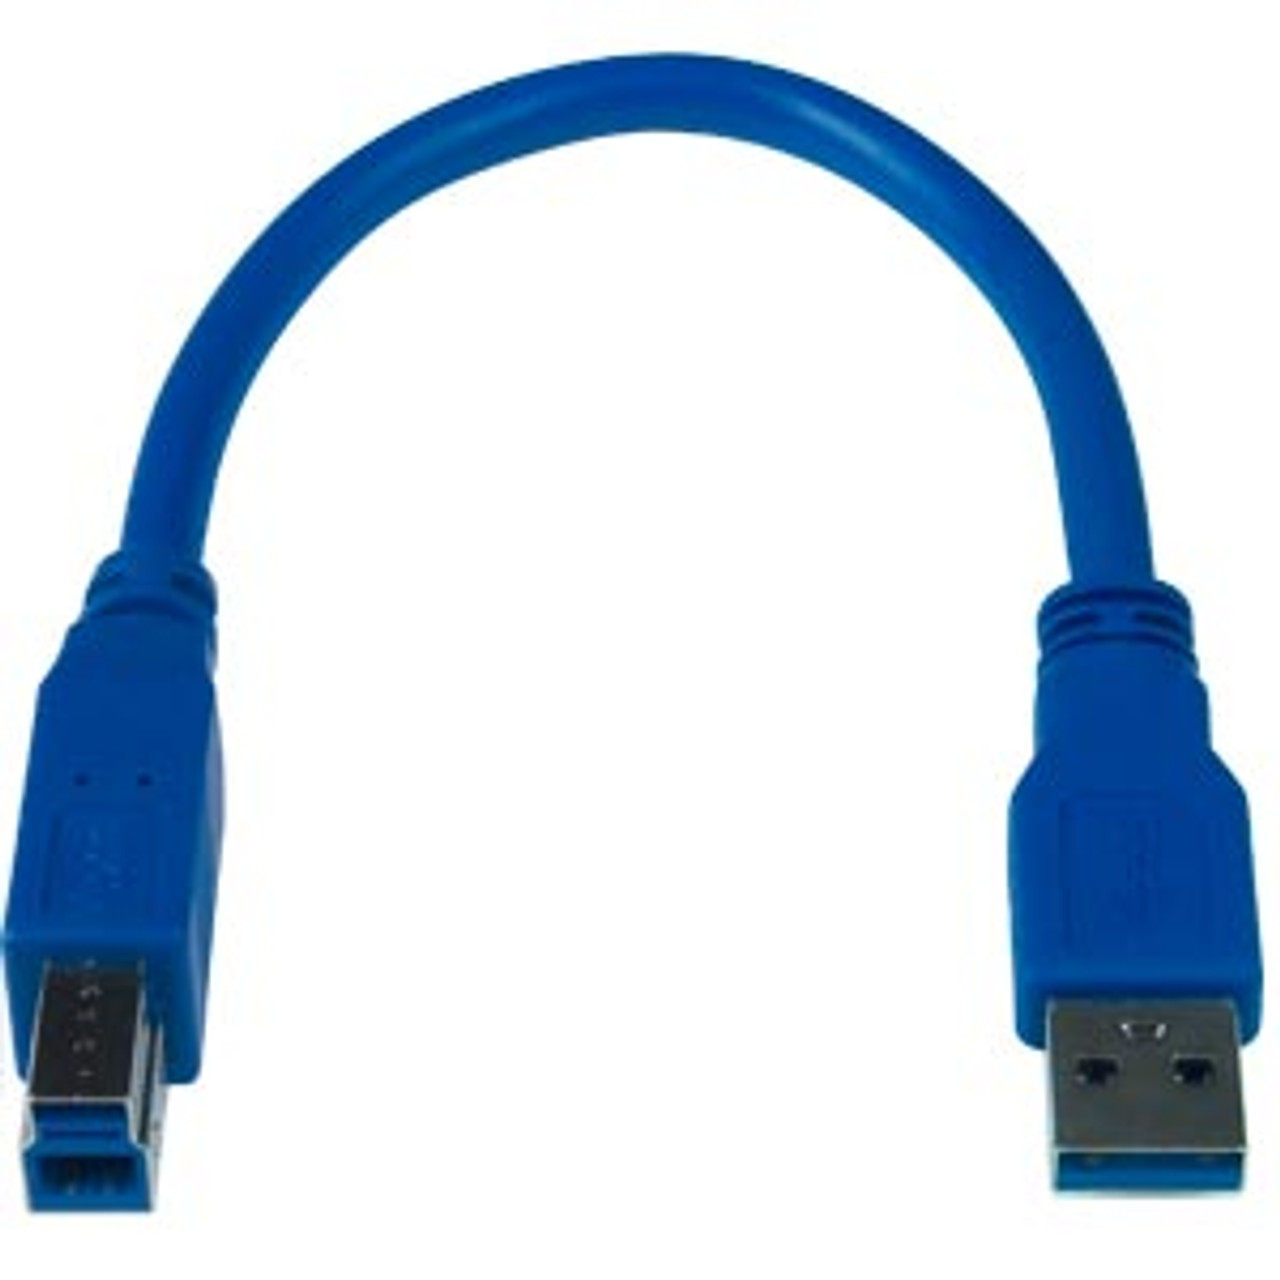 Nti Usb3 Ambm 15cm Usb 3 0 Type A Male To Type B Male Gender Changer Cable Pro Av Warehouse